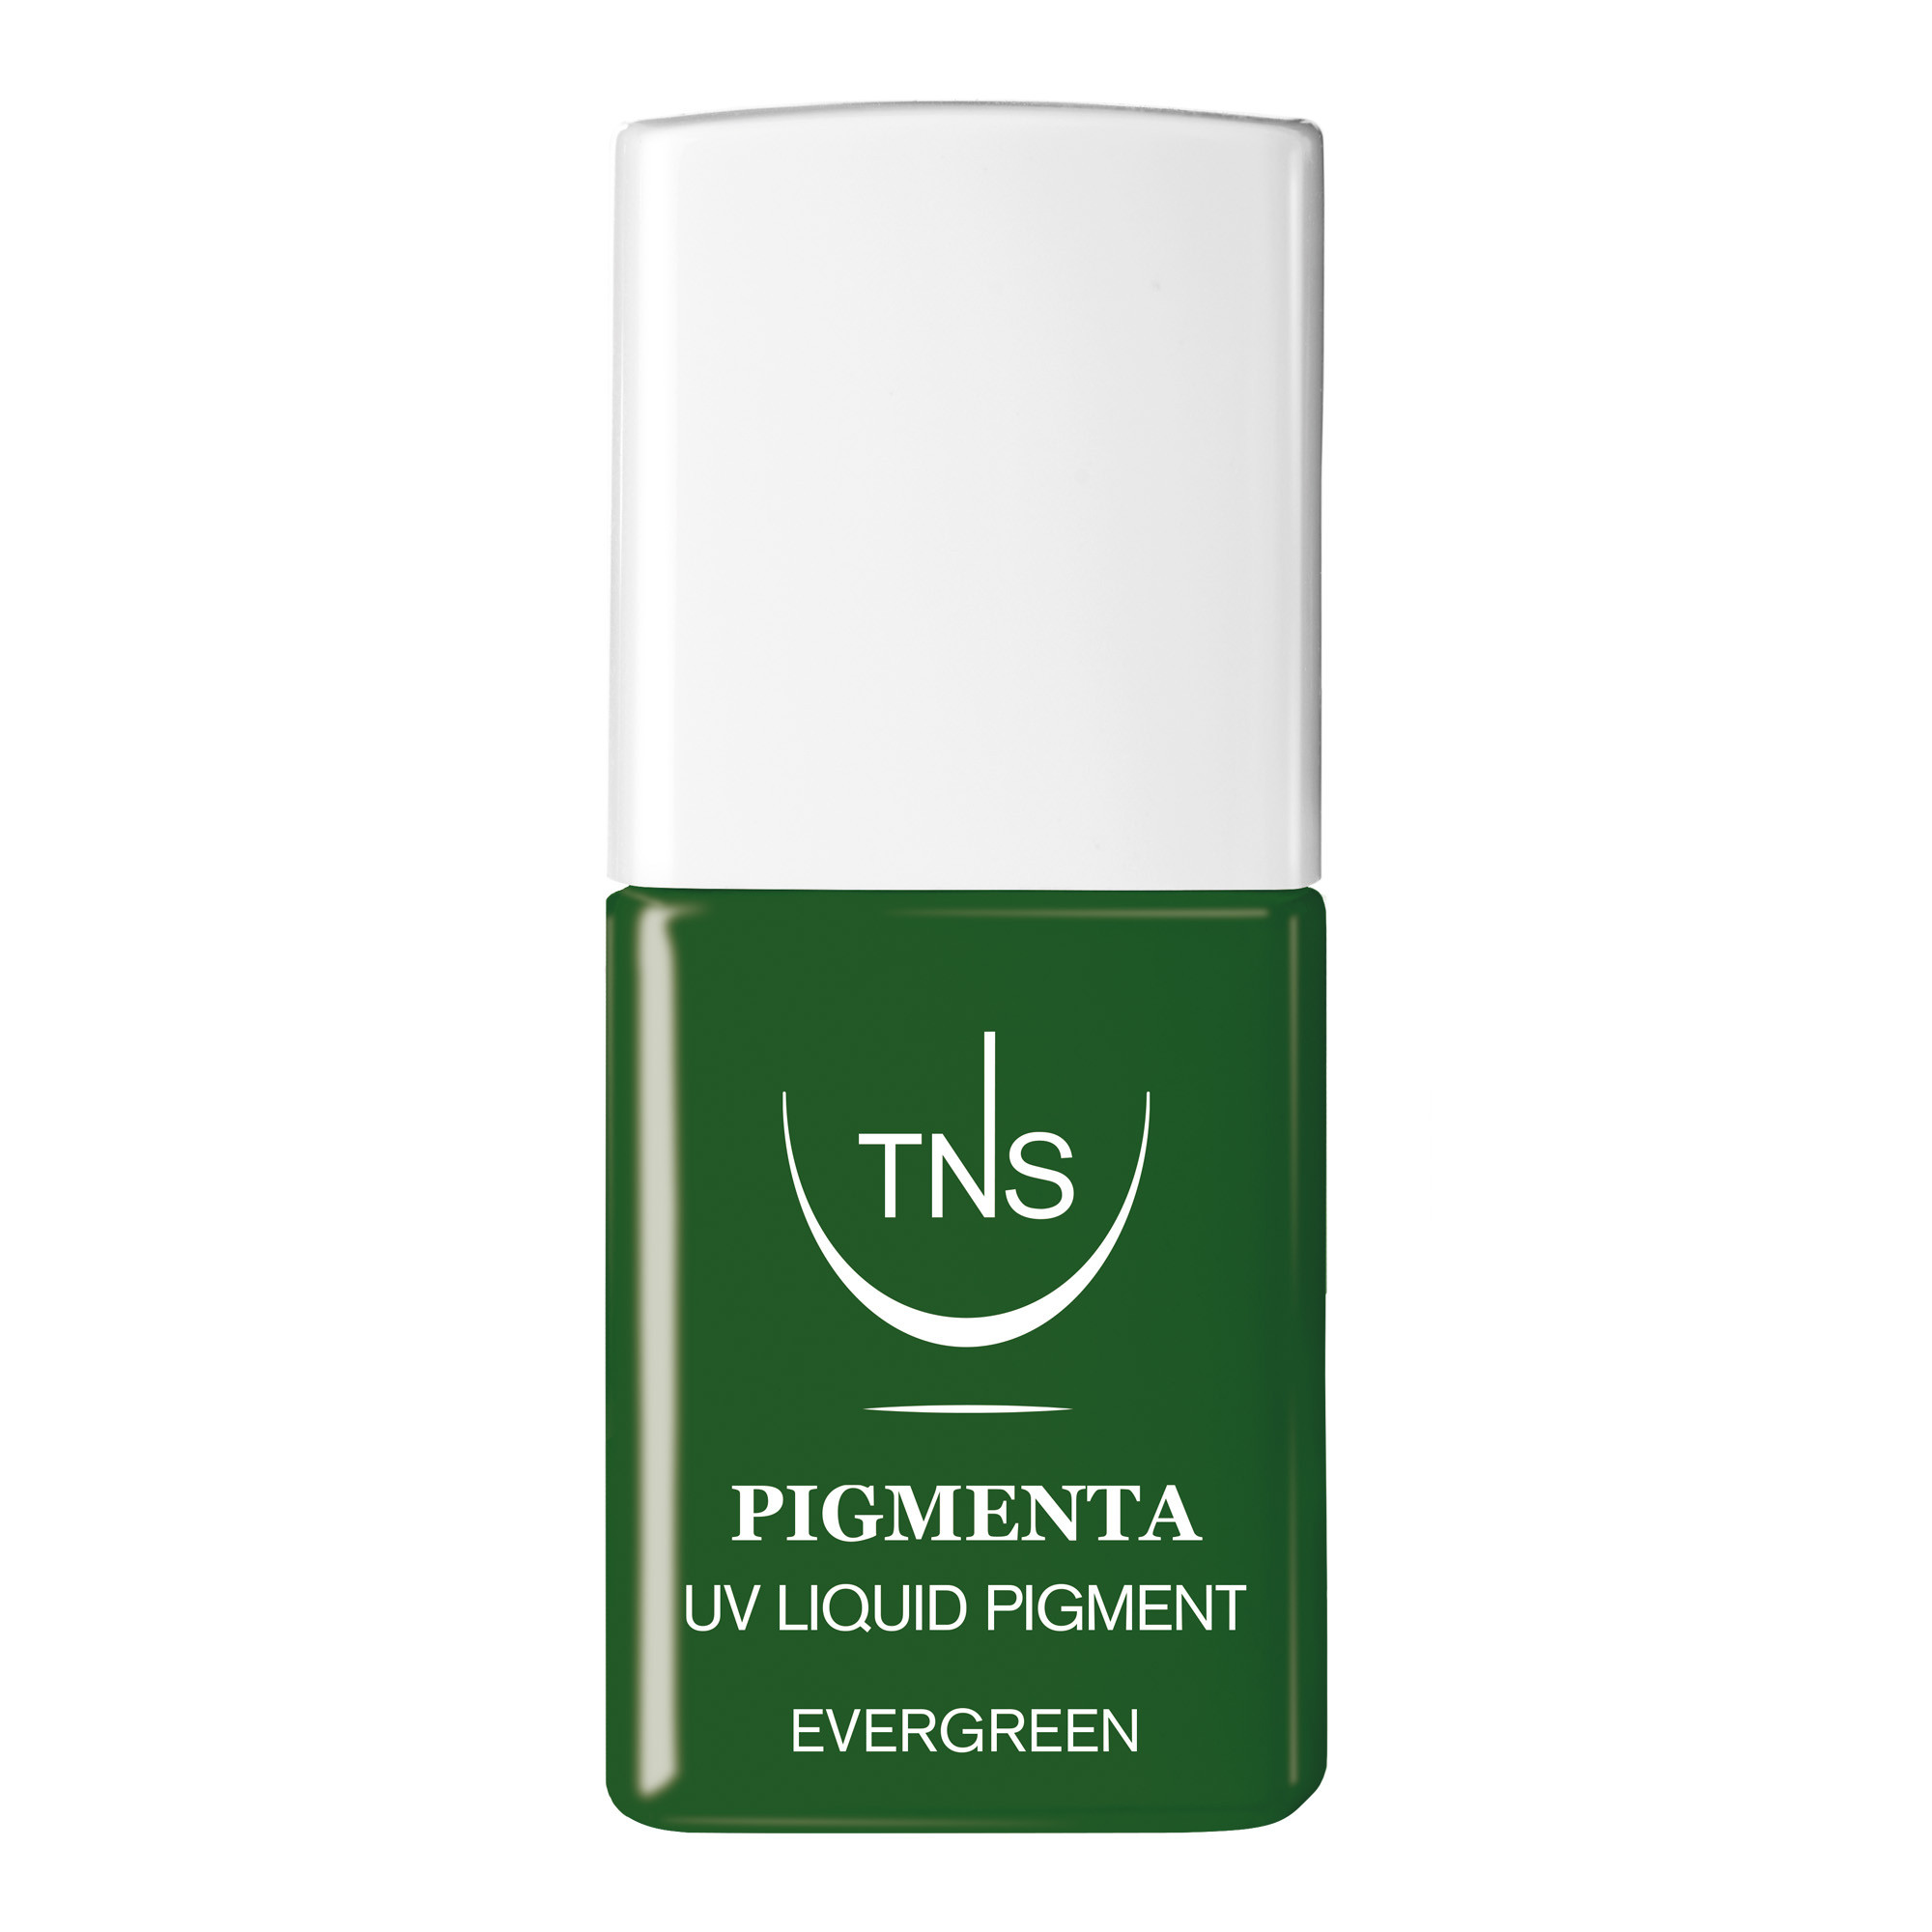 UV Flüssigpigment Evergreen Grün 10 ml Pigmenta TNS